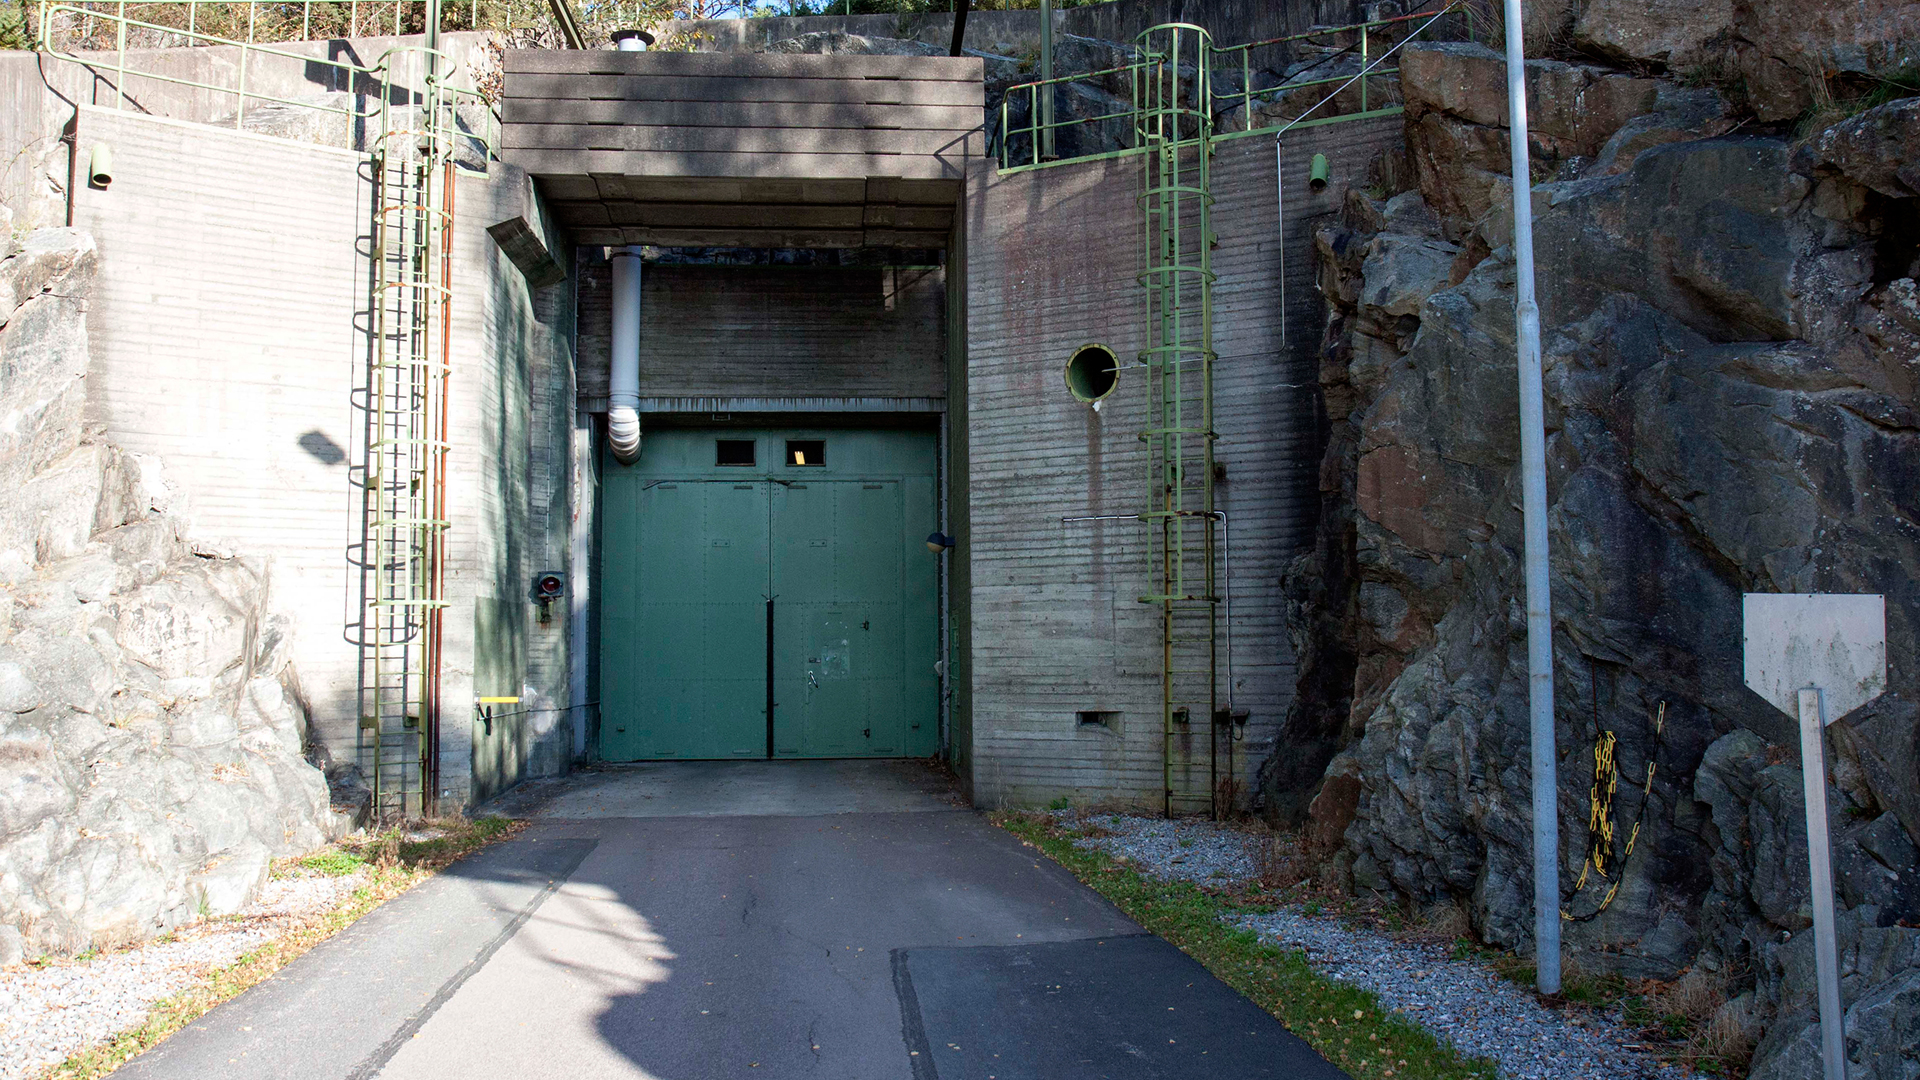 The green steel doors of the hidden power plant in Stenungsund, Sweden